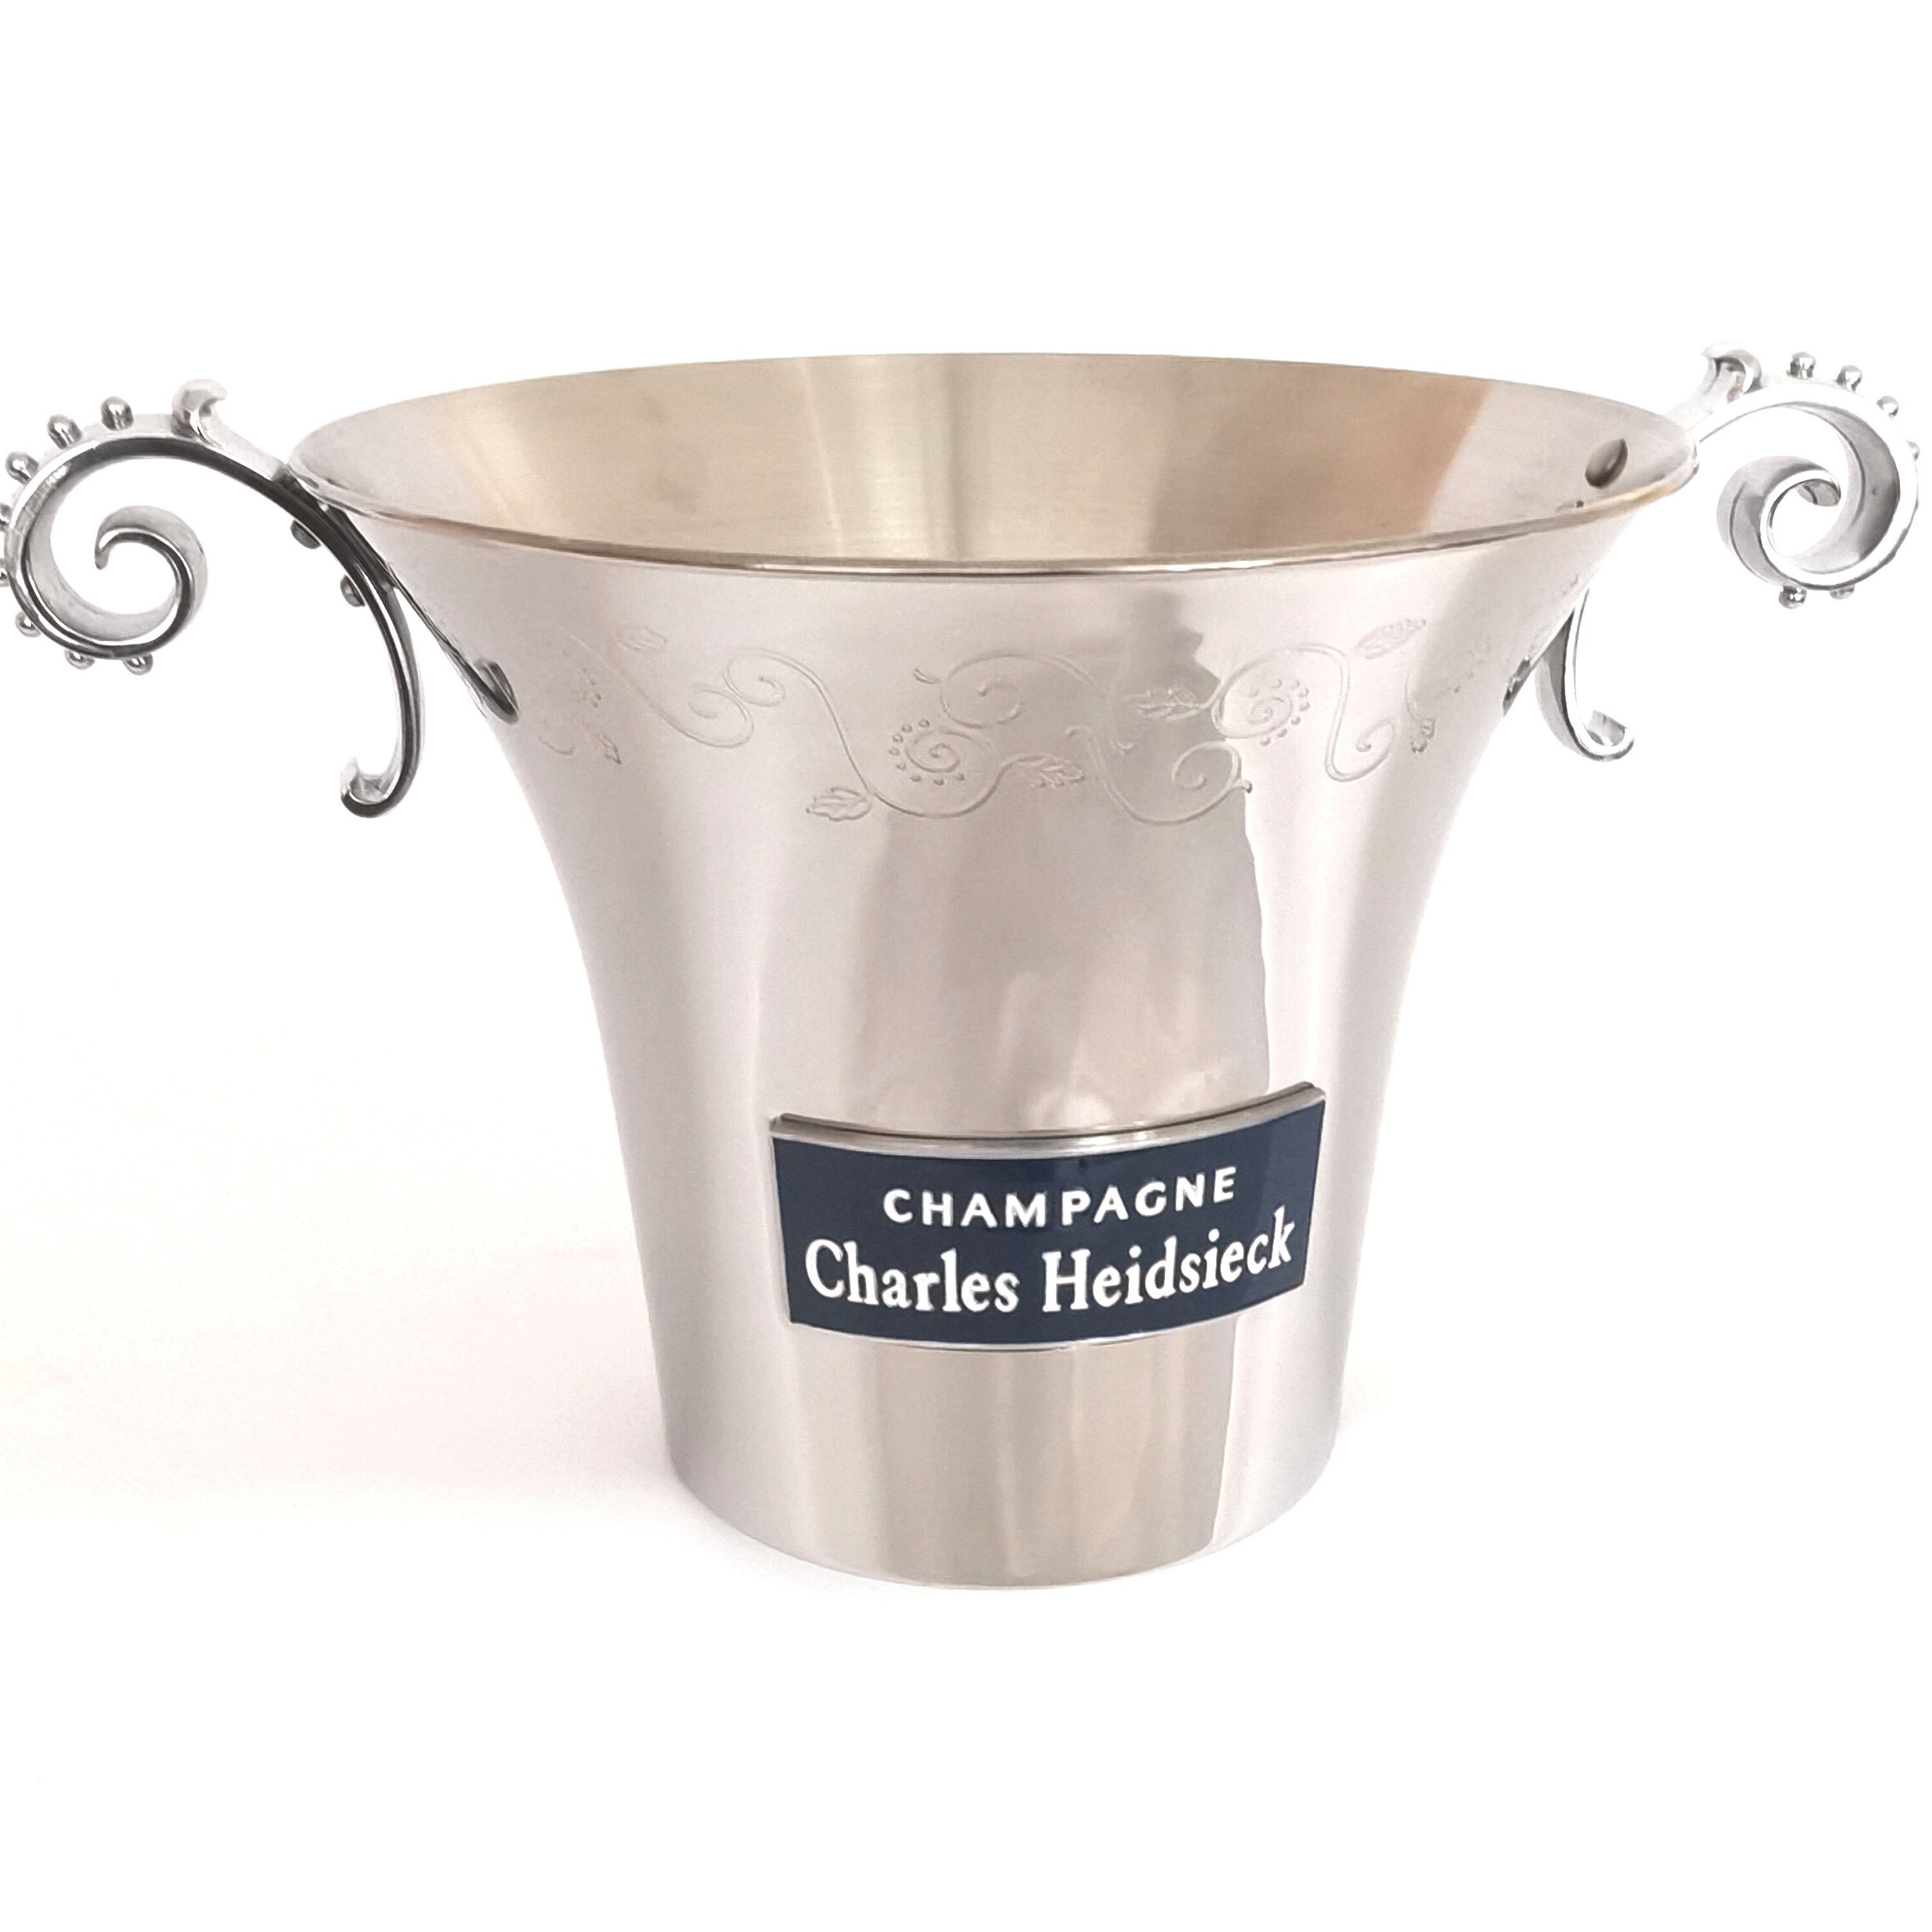 Seau à Champagne Charles Heidsieck de Prestige/Mint Champagne Ice Bucket From Charles Heidsieck Vint